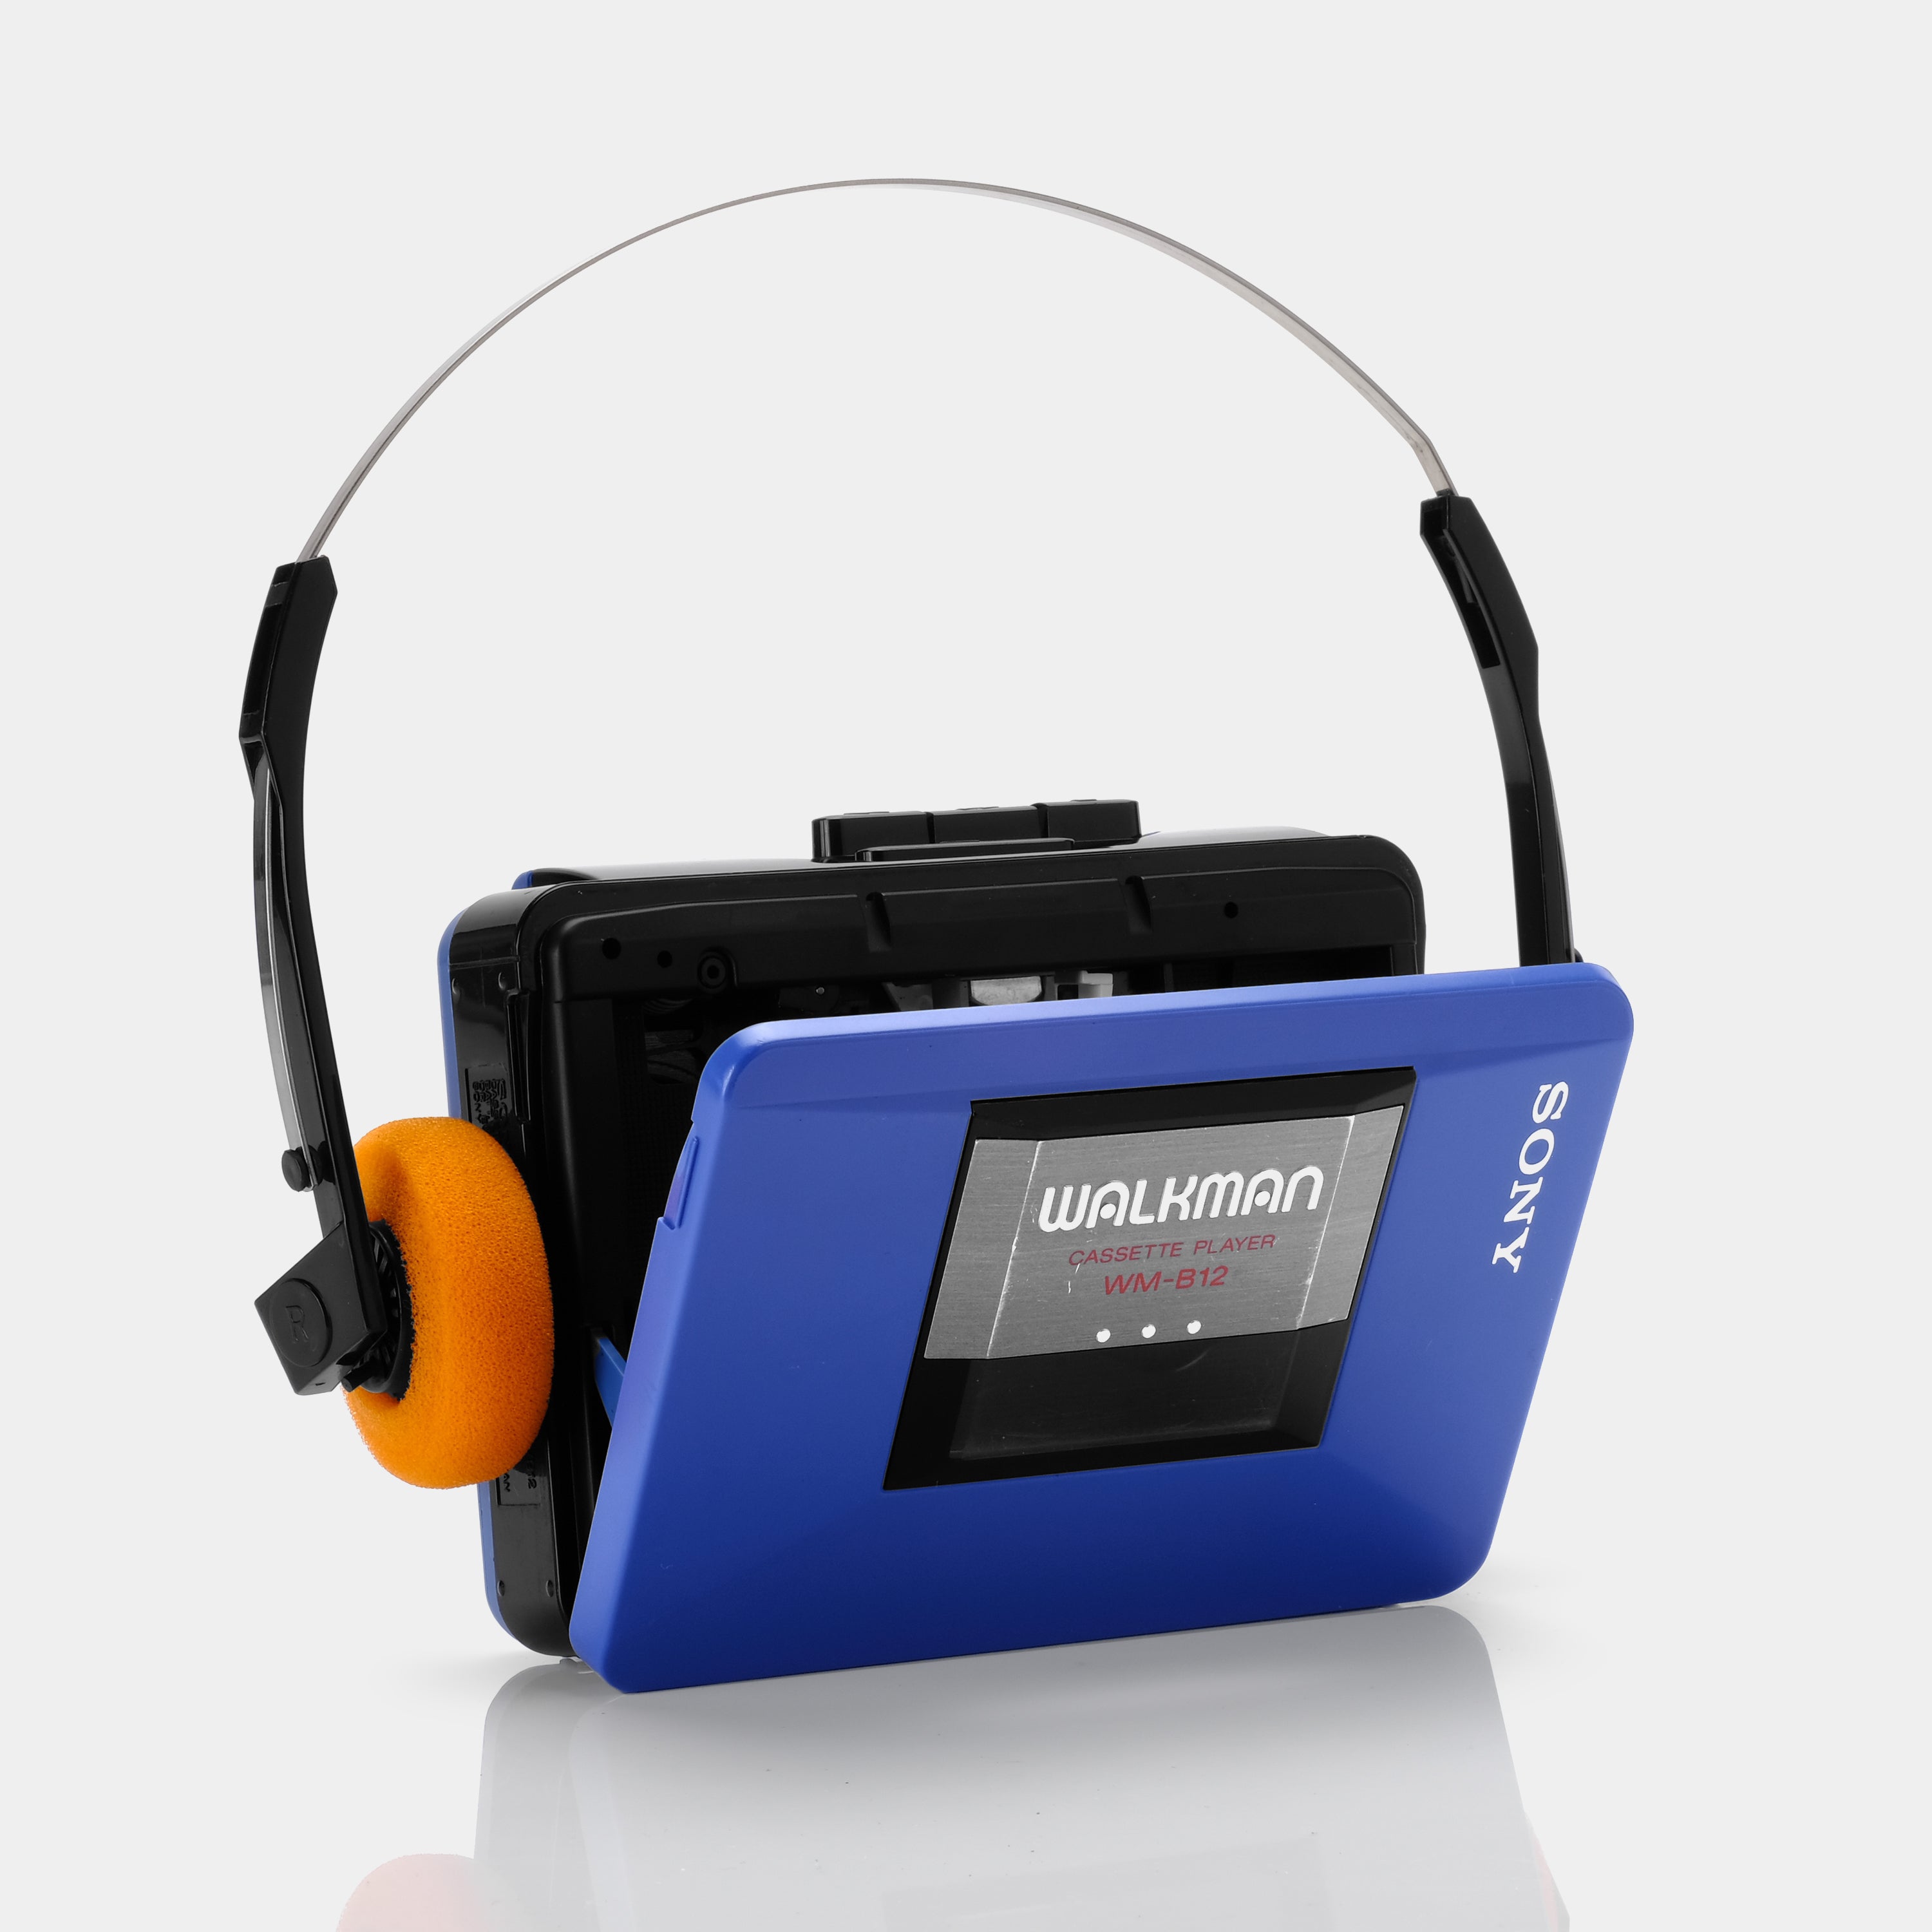 Sony Walkman WM-A12/B12 Blue Portable Cassette Player